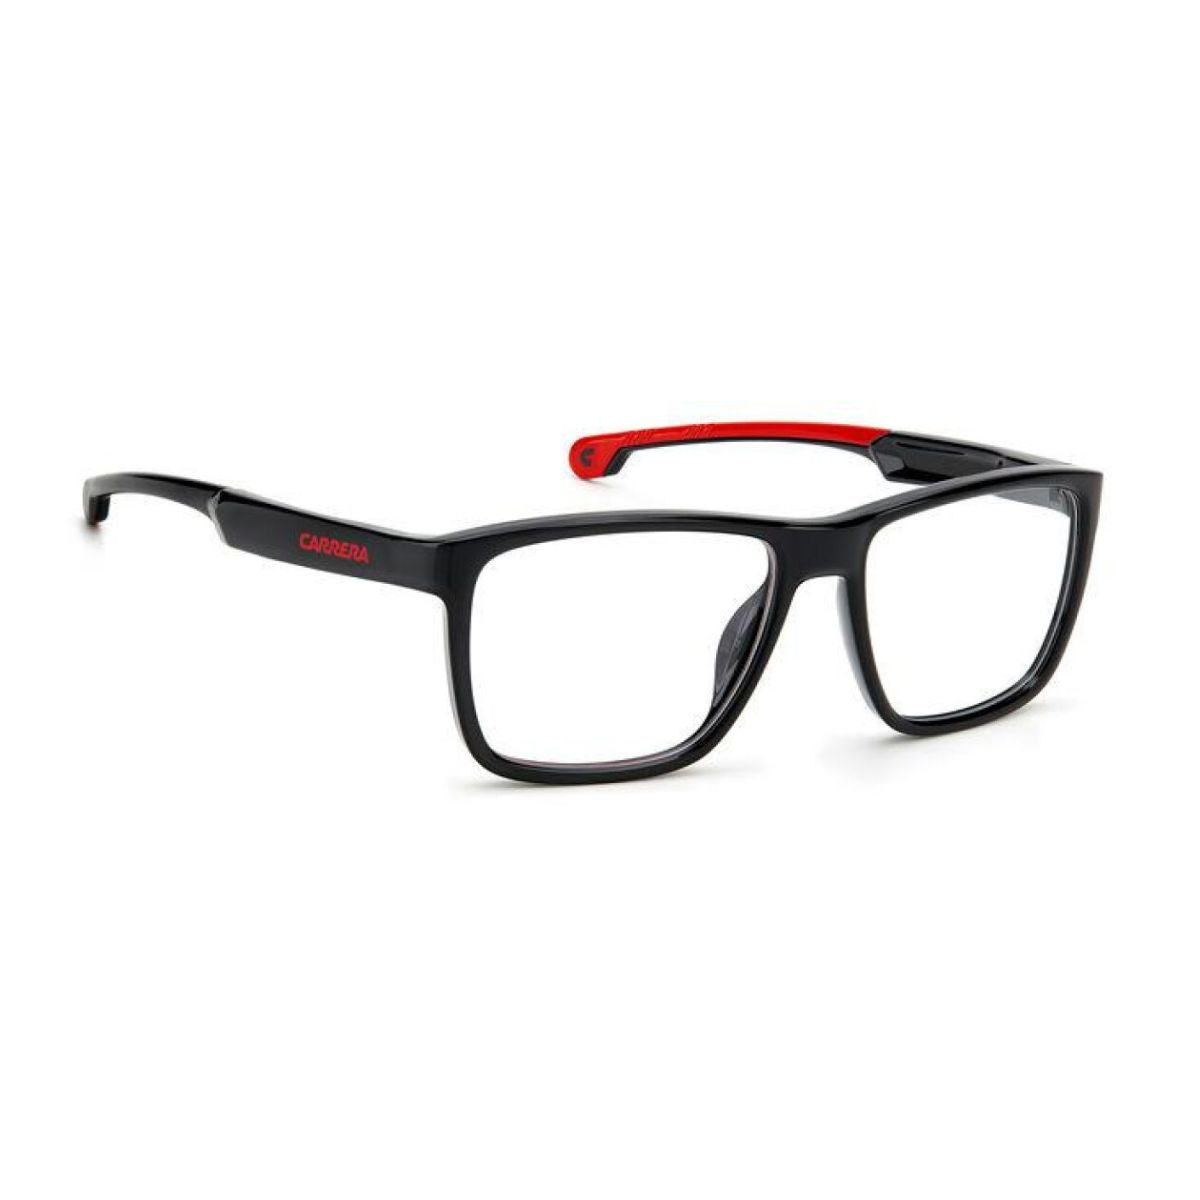 "shop Carrera CARDUC 010 OIT prescription eyesight glasses frame for men's online at optorium'